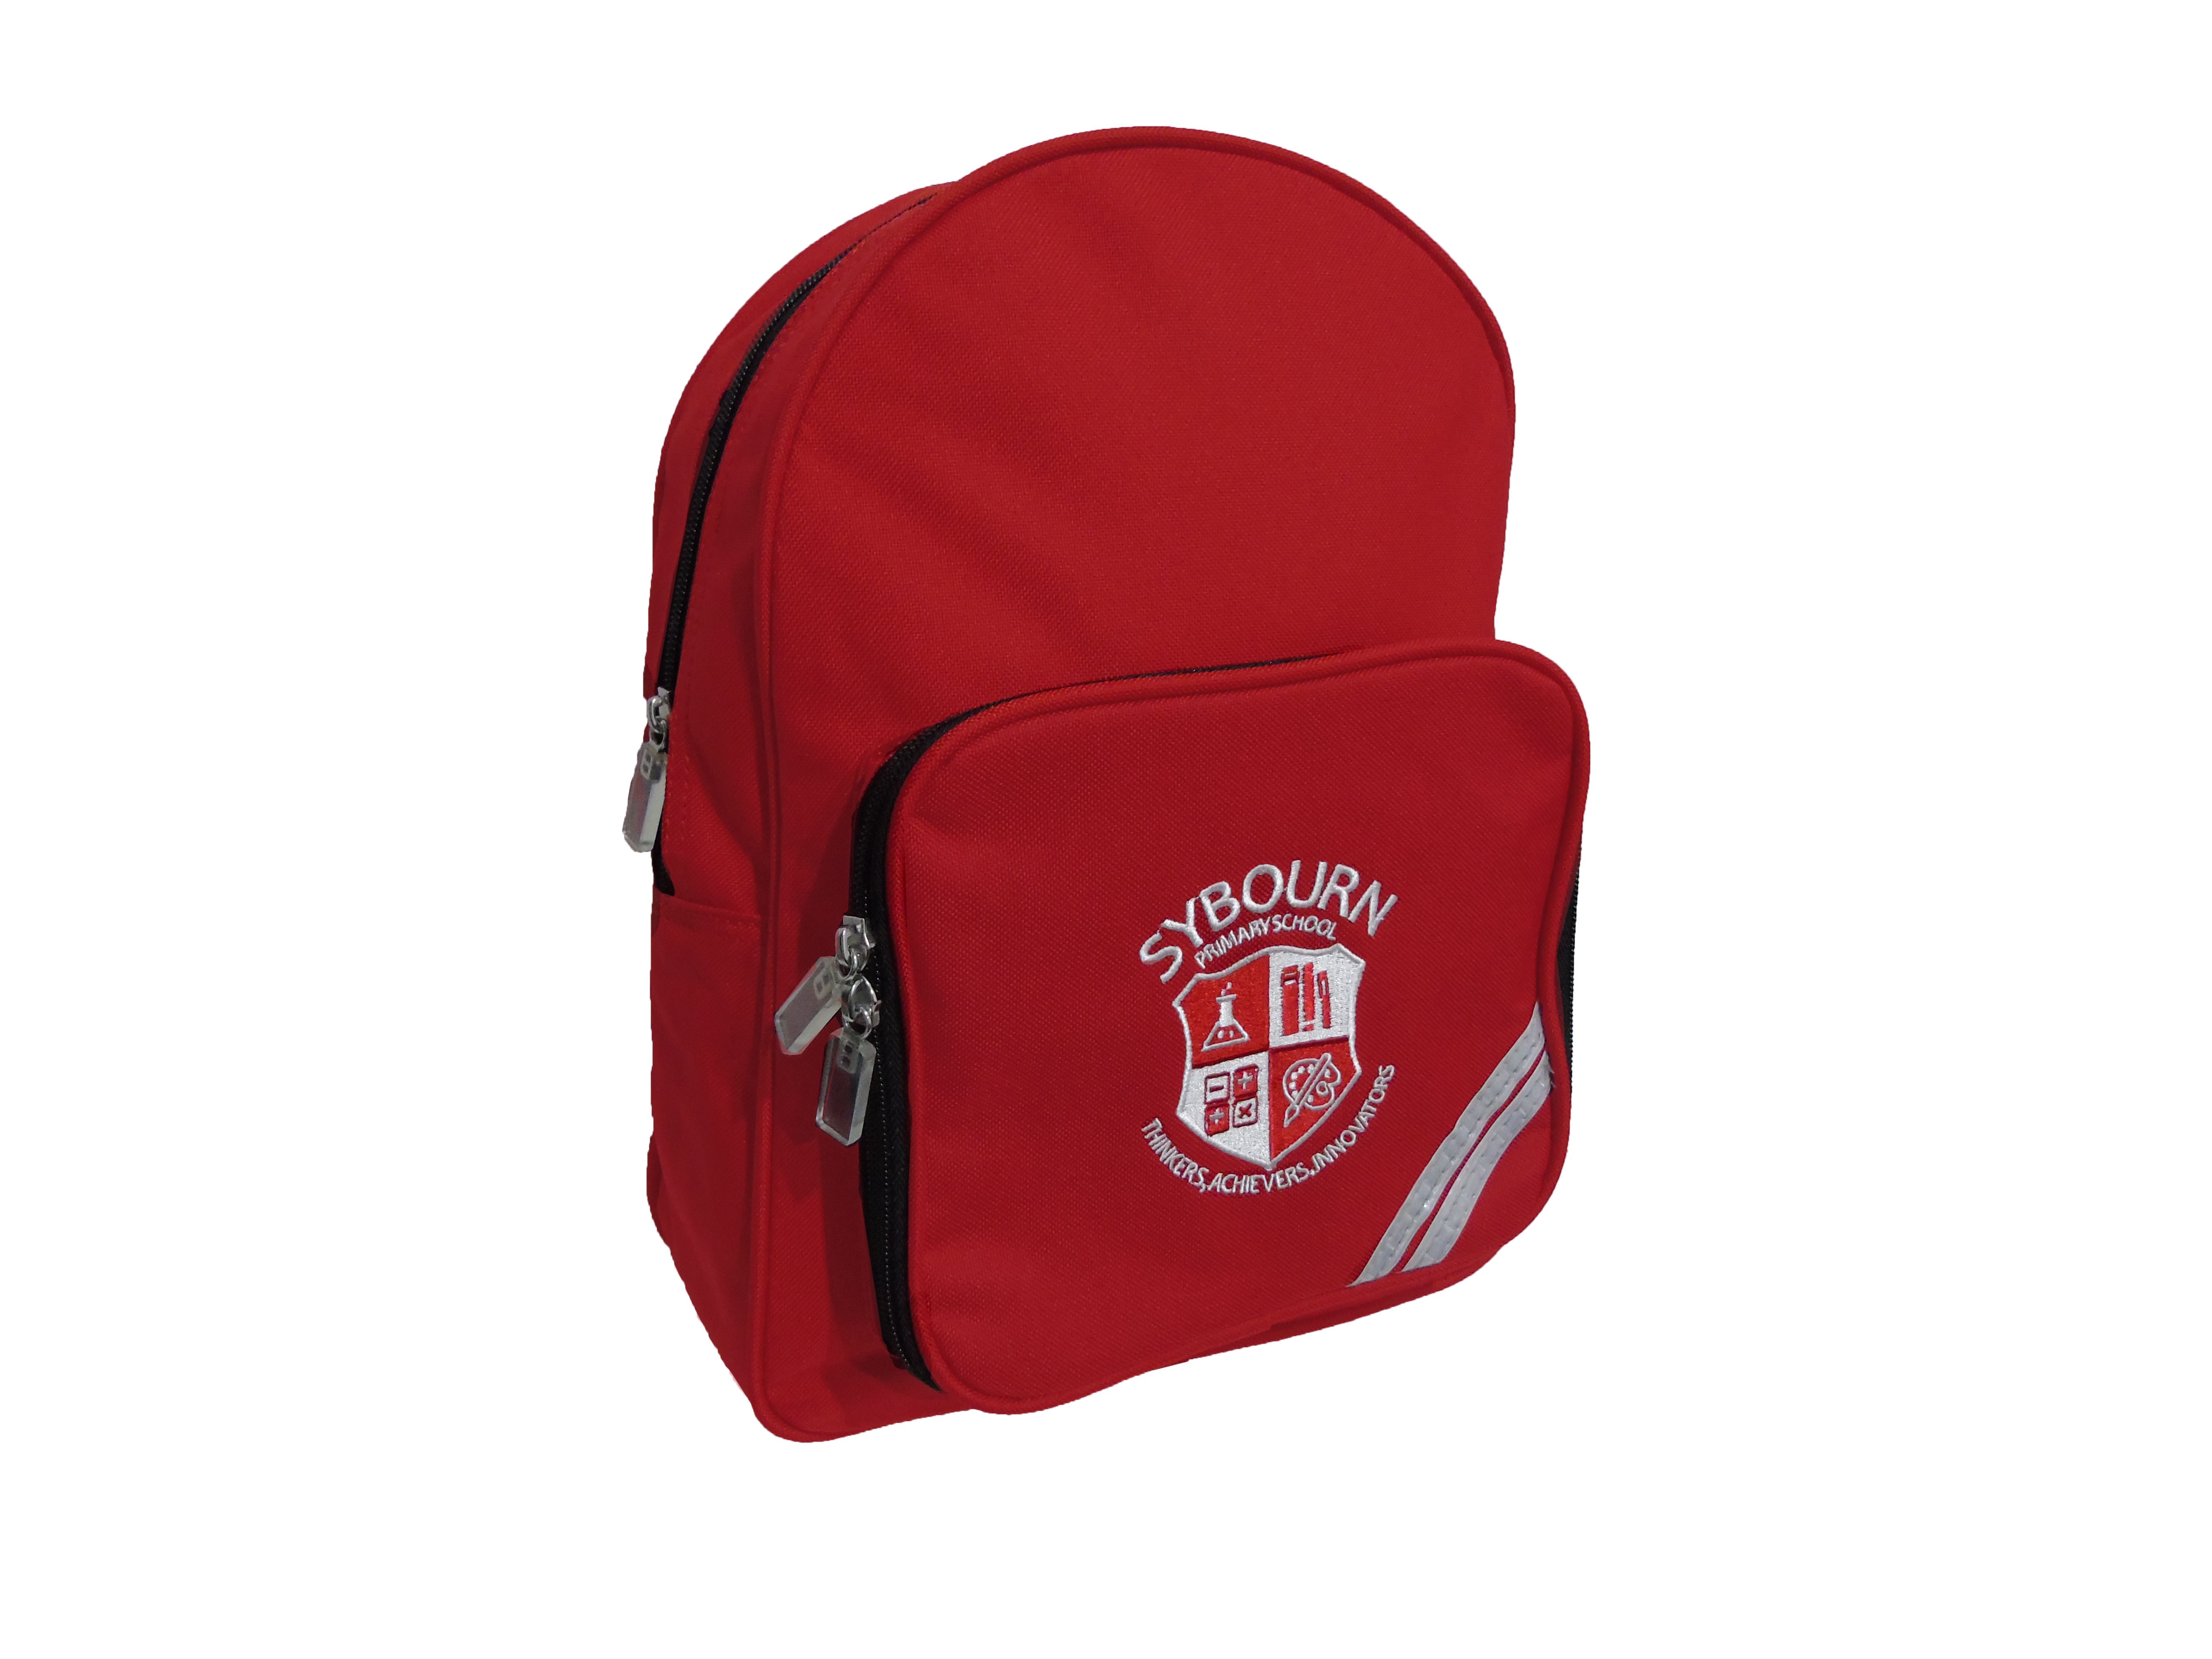 Sybourn Backpack